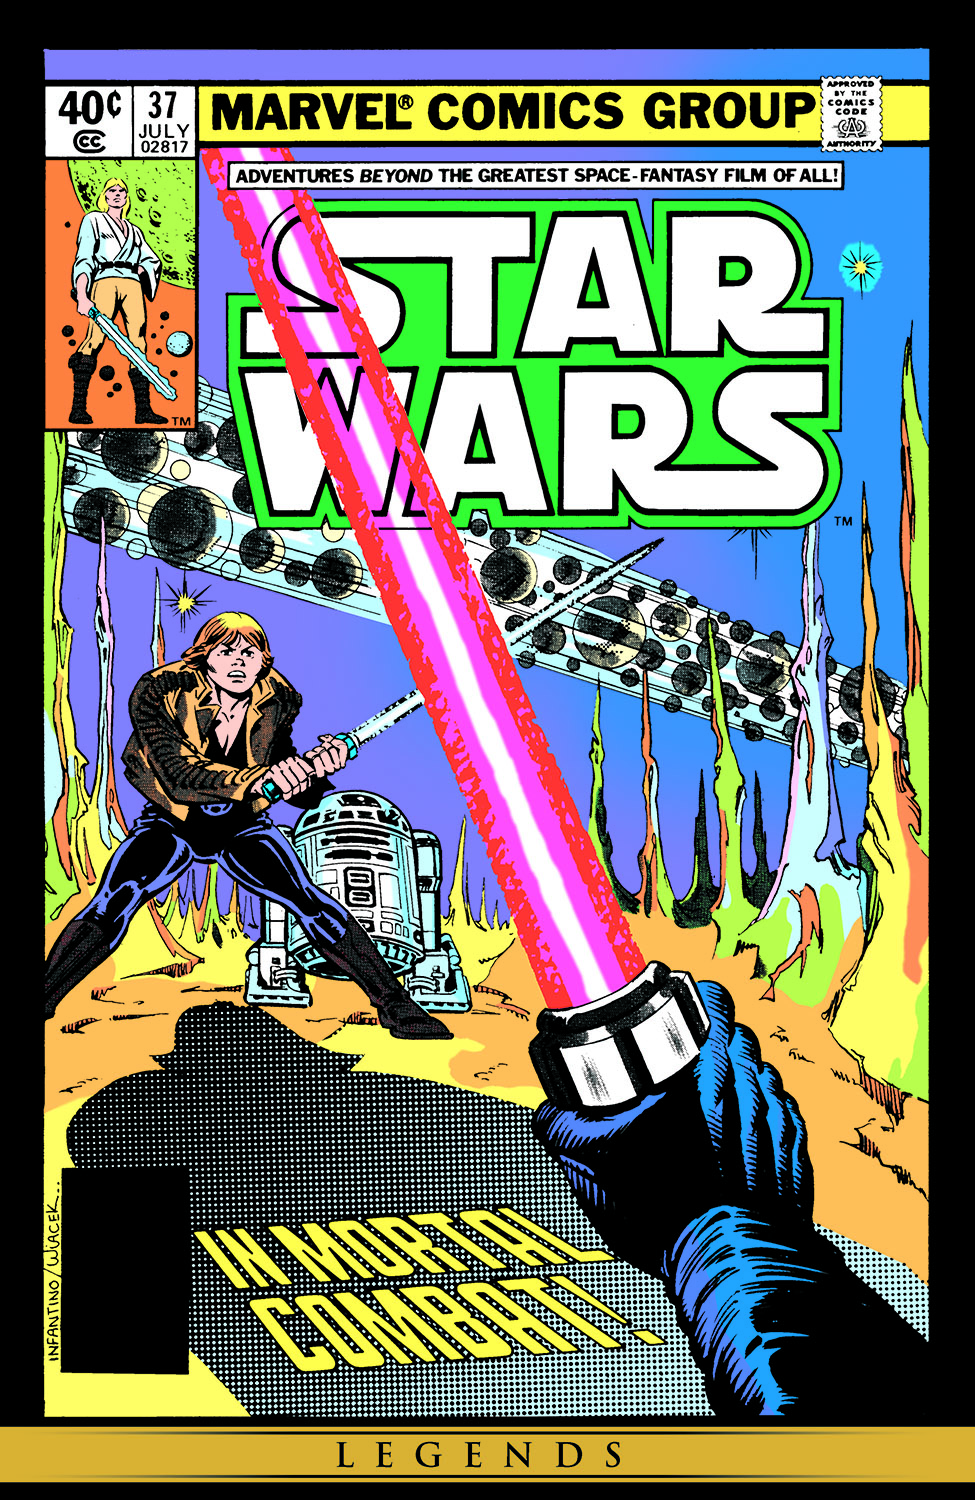 Star Wars (1977) #37